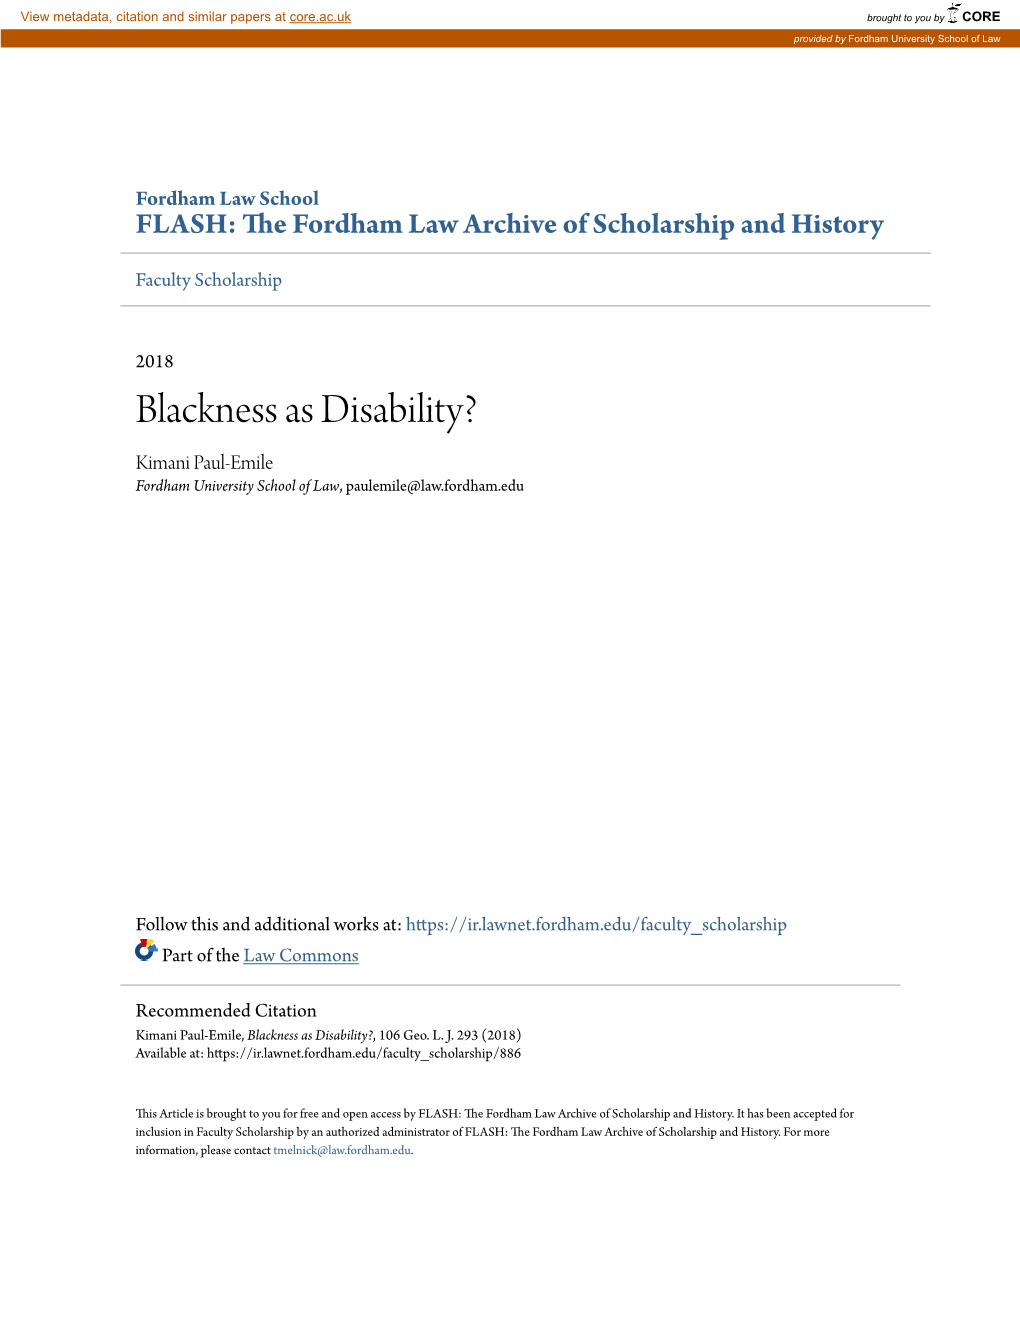 Blackness As Disability? Kimani Paul-Emile Fordham University School of Law, Paulemile@Law.Fordham.Edu